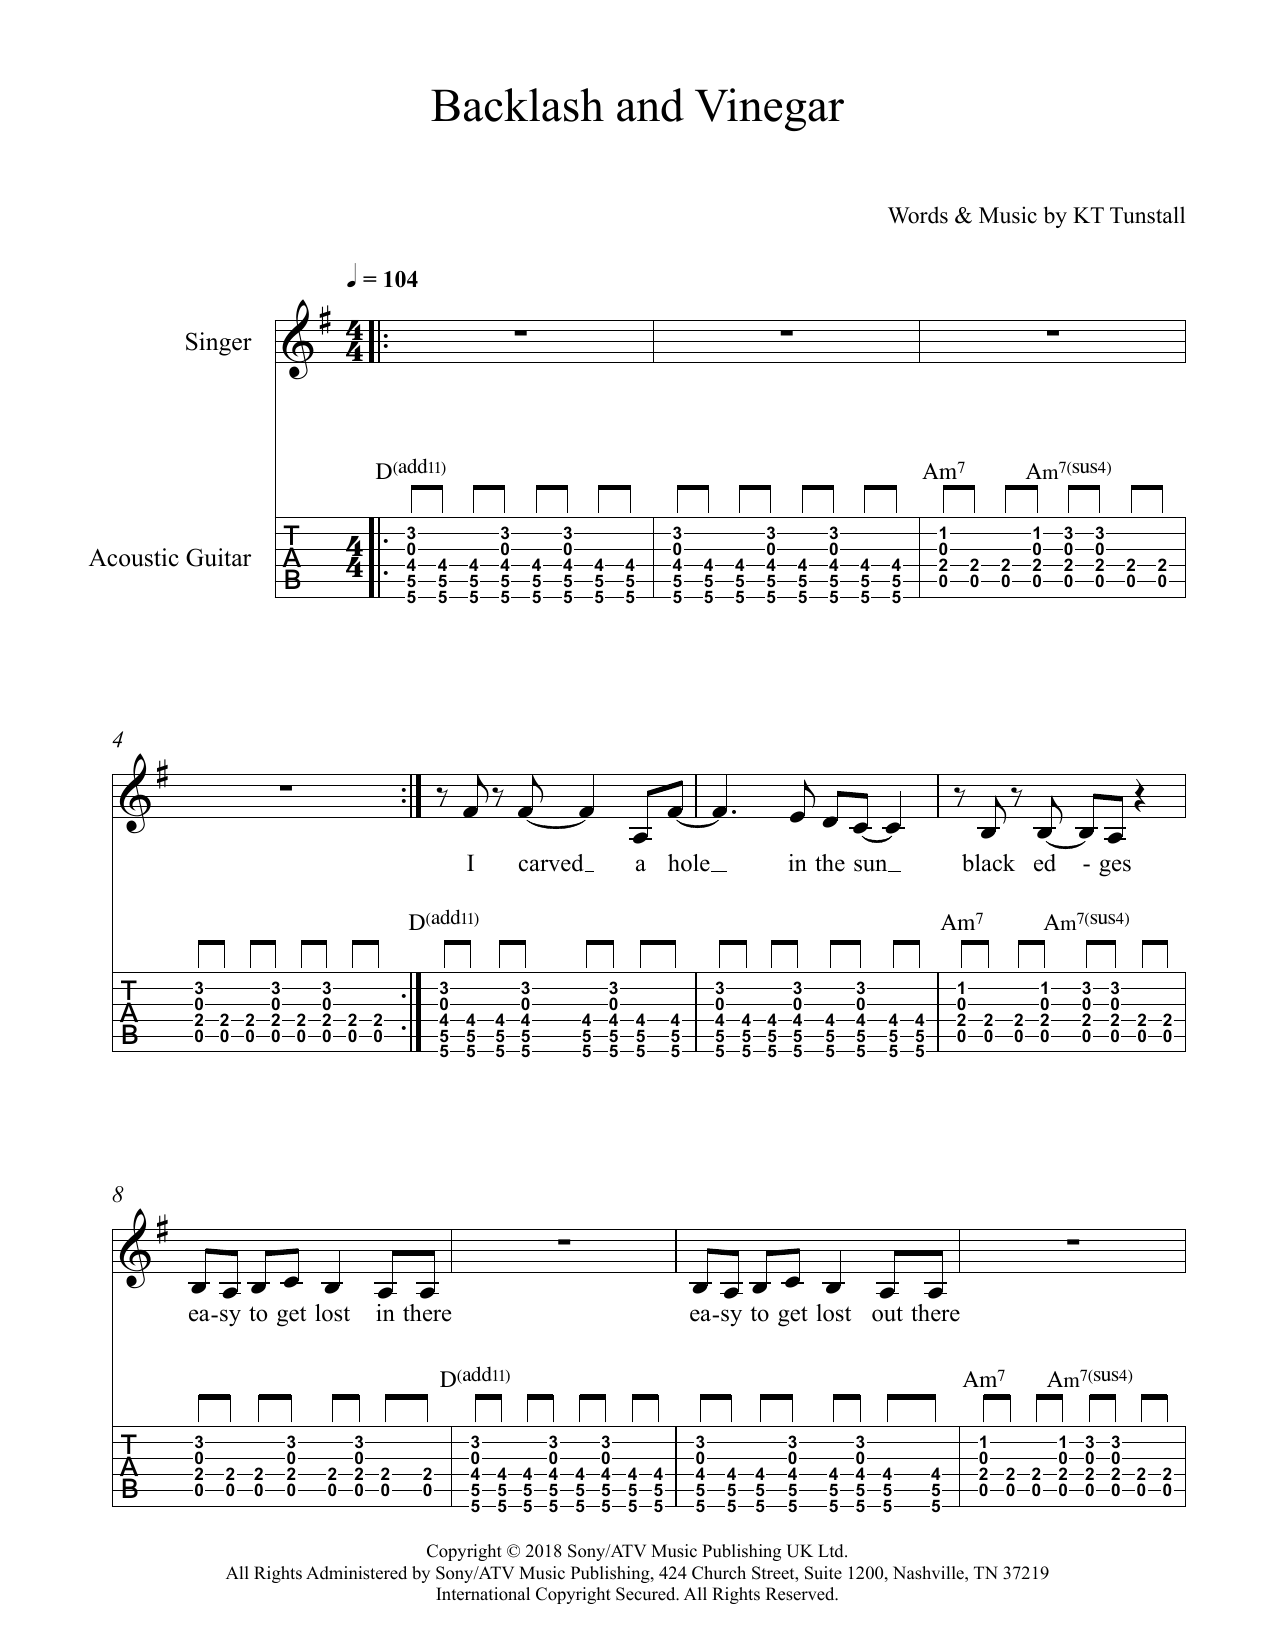 KT Tunstall Backlash & Vinegar Sheet Music Notes & Chords for Solo Guitar - Download or Print PDF